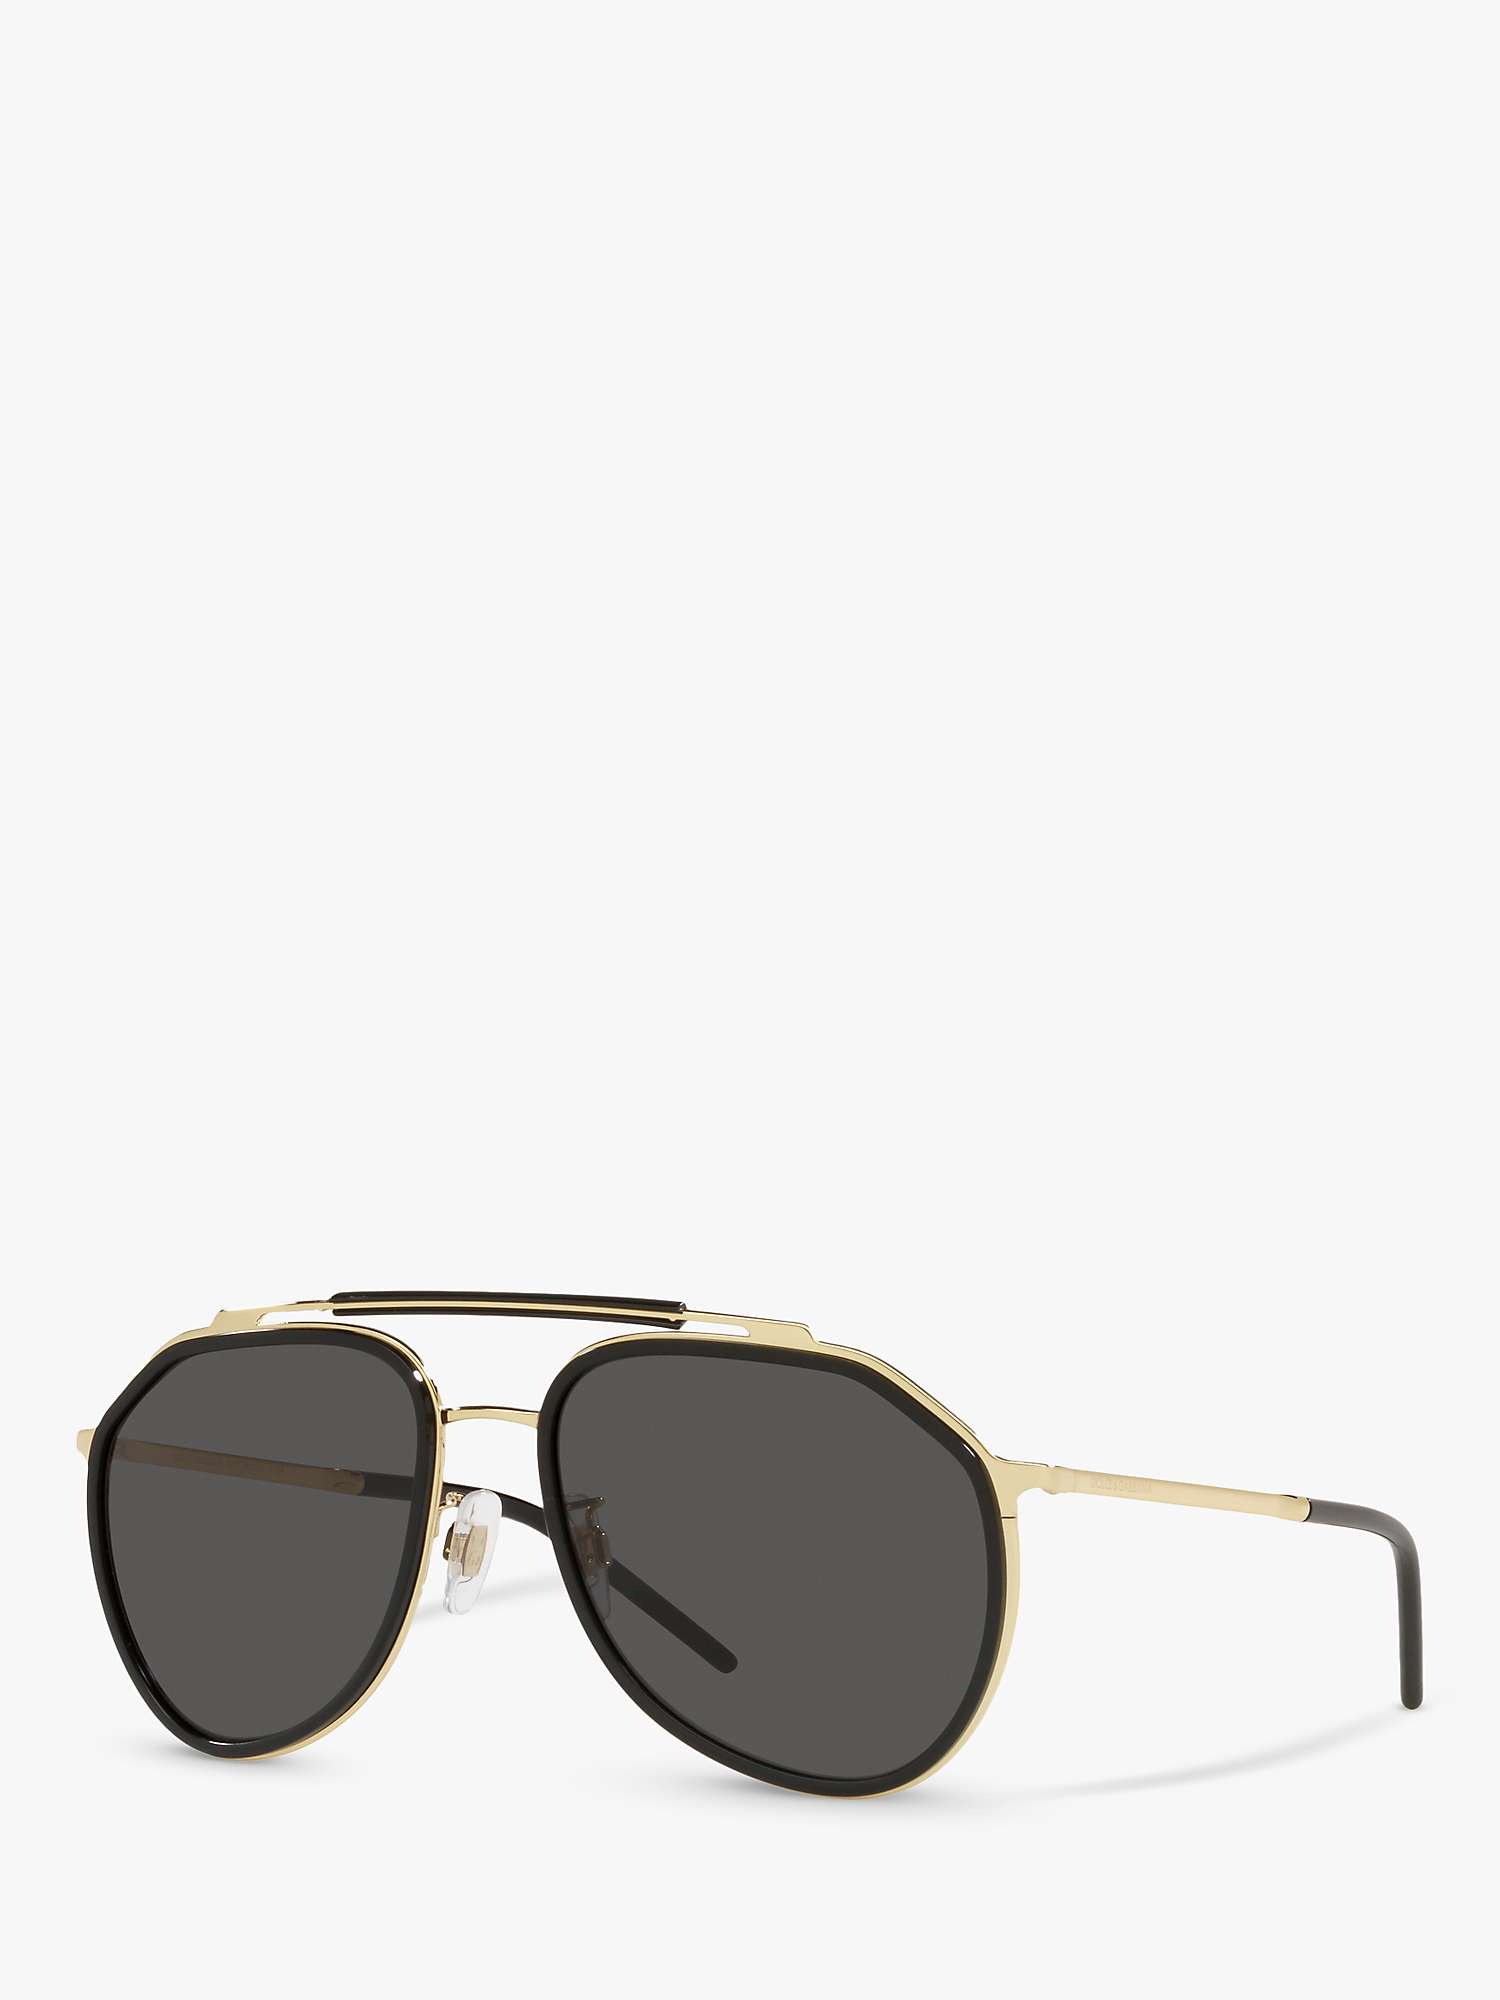 Dolce & Gabbana DG2277 Men's Aviator Sunglasses, Gold/Black, Gold/Black ...